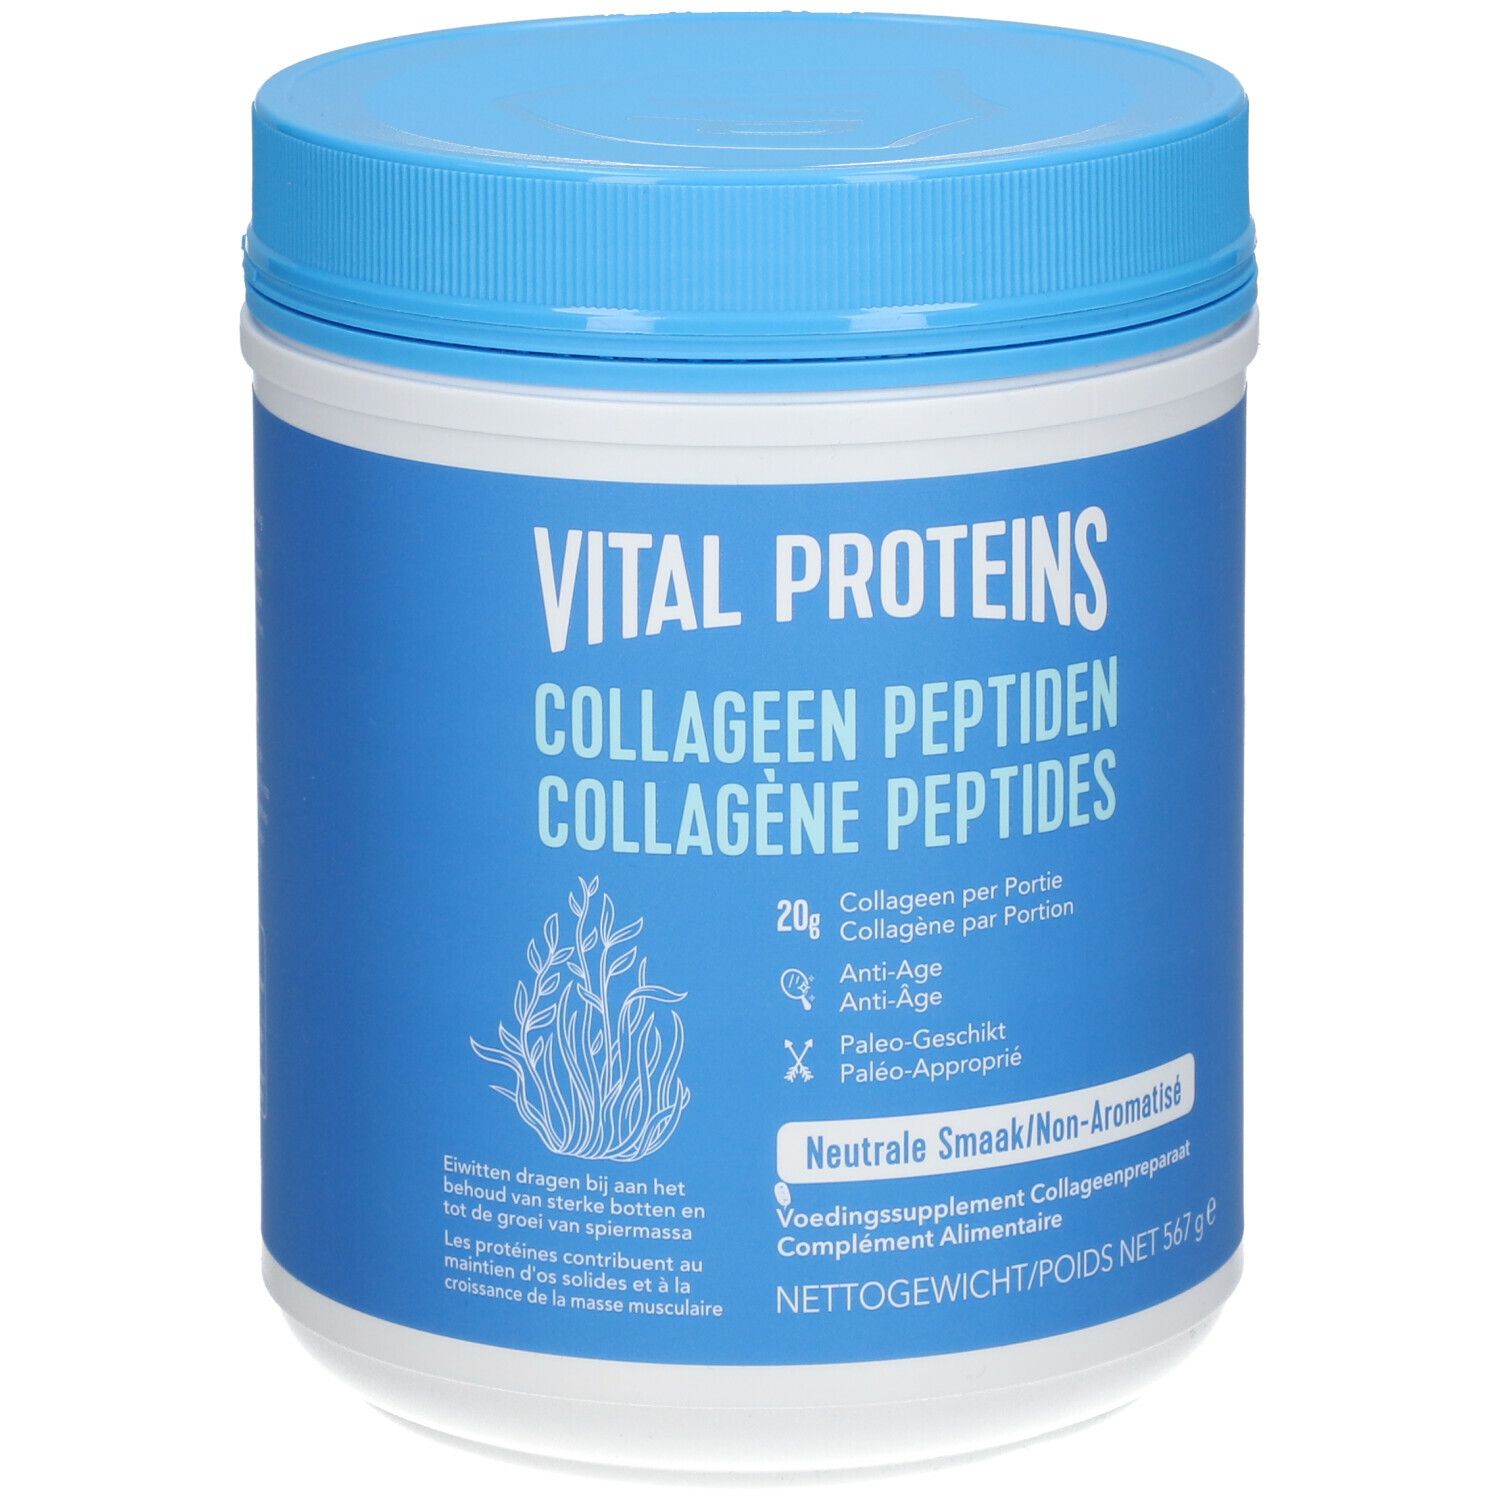 VITAL PROTEINS® Collagen Peptides